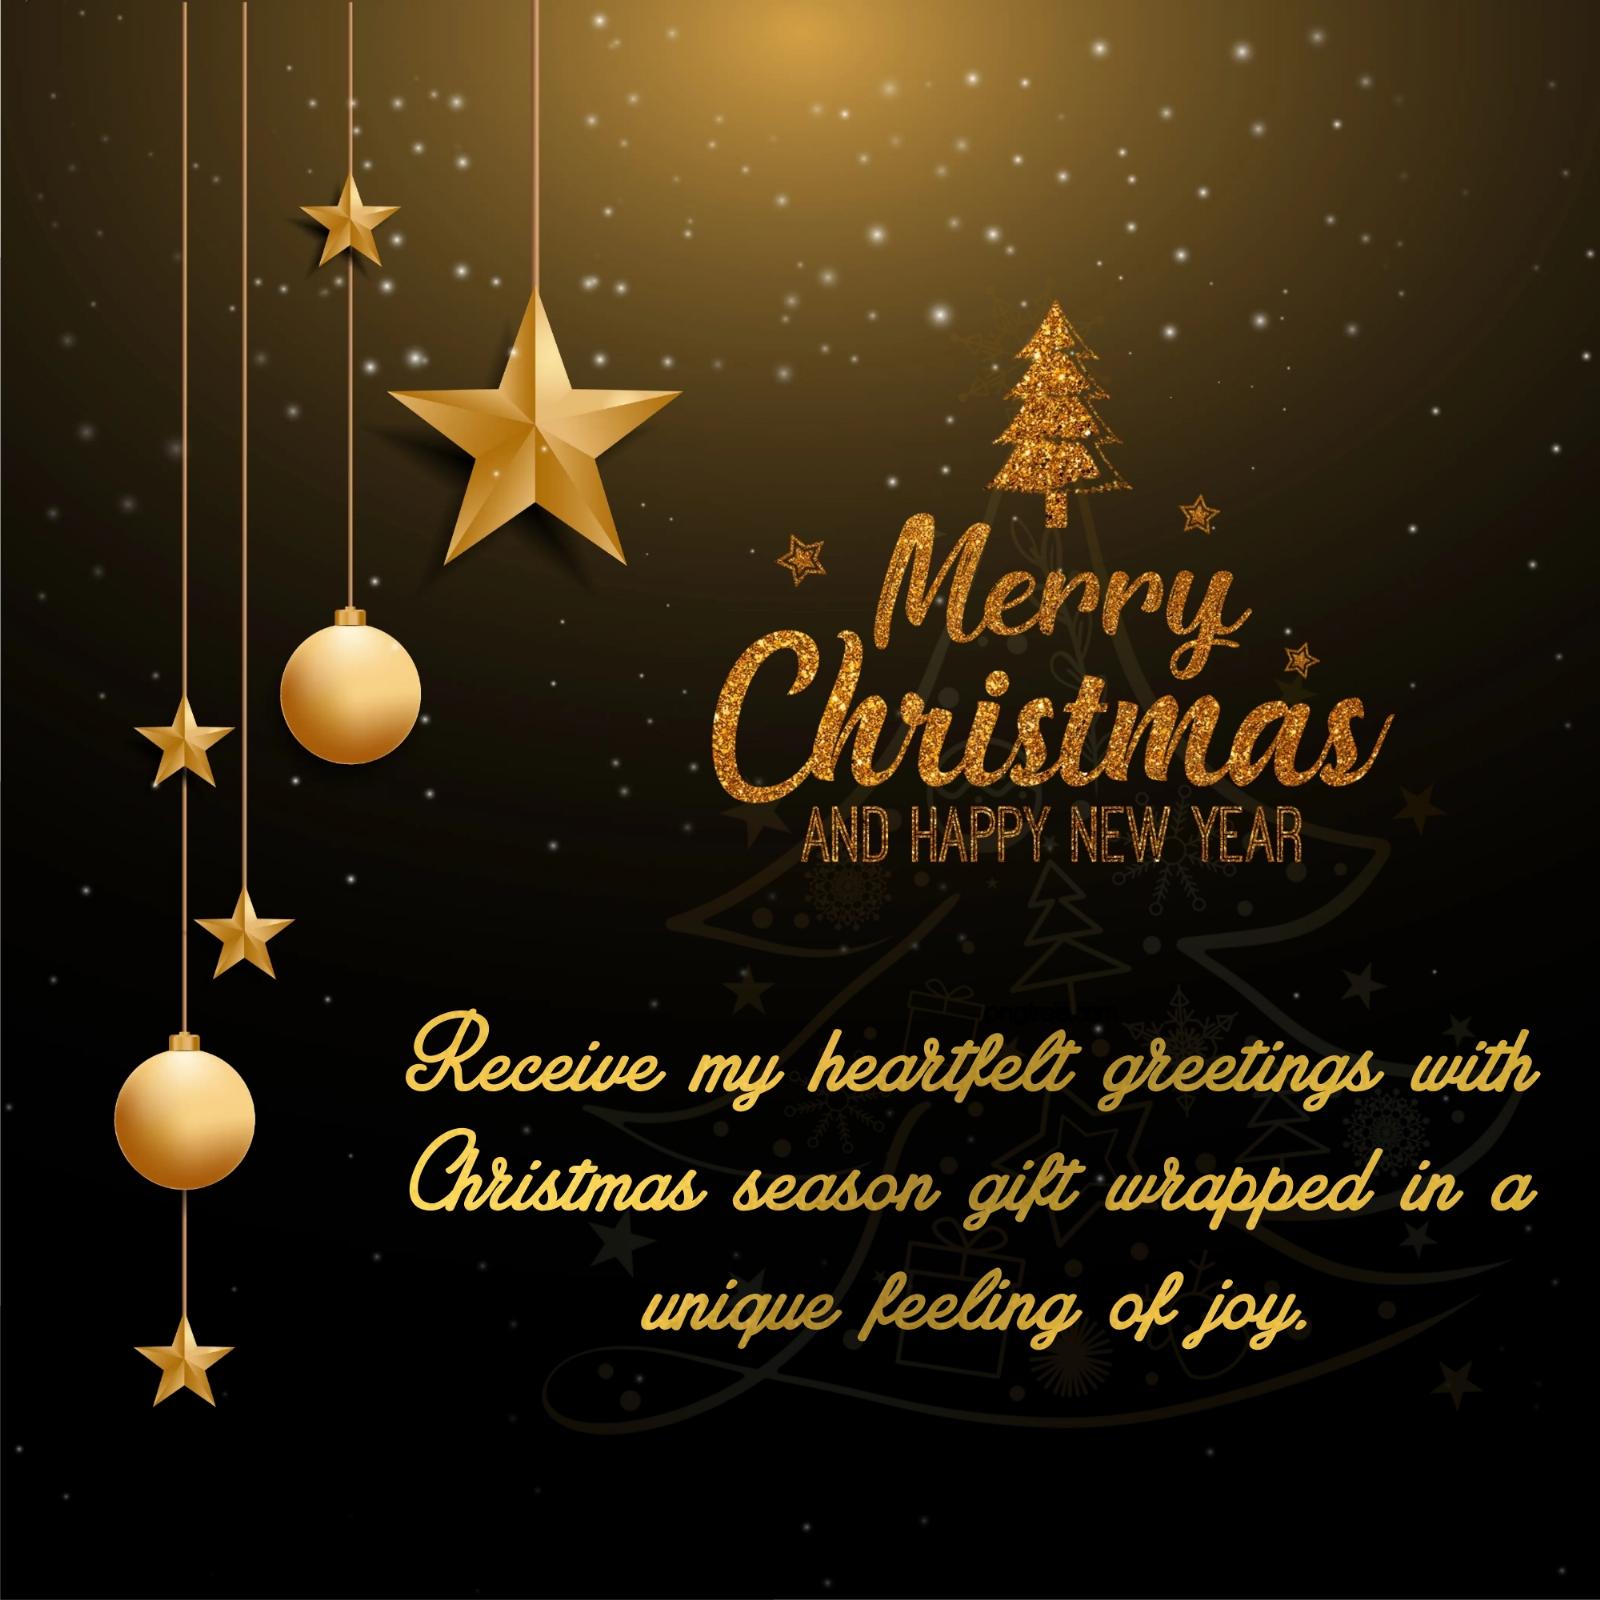 Receive my heartfelt greetings with Christmas season